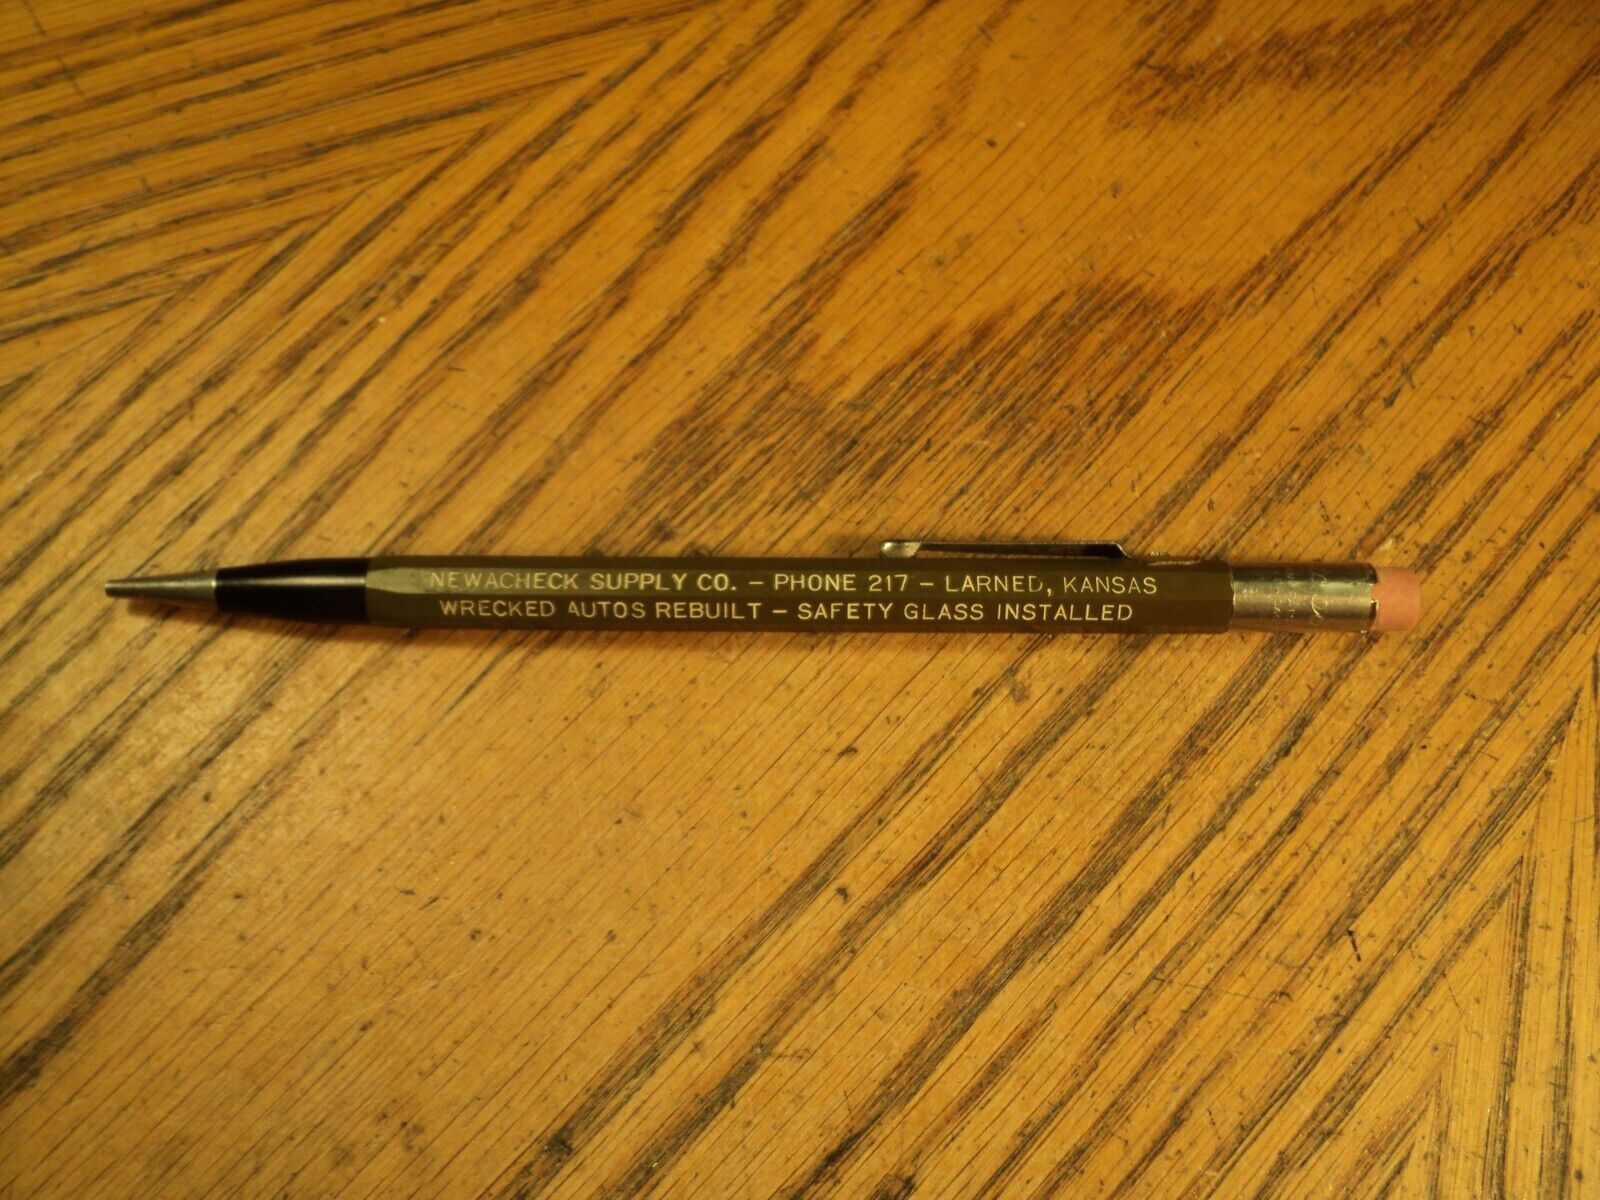 Vintage Autopoint Mechanical Pencil   Newacheck Supply Co  Larned Kansas